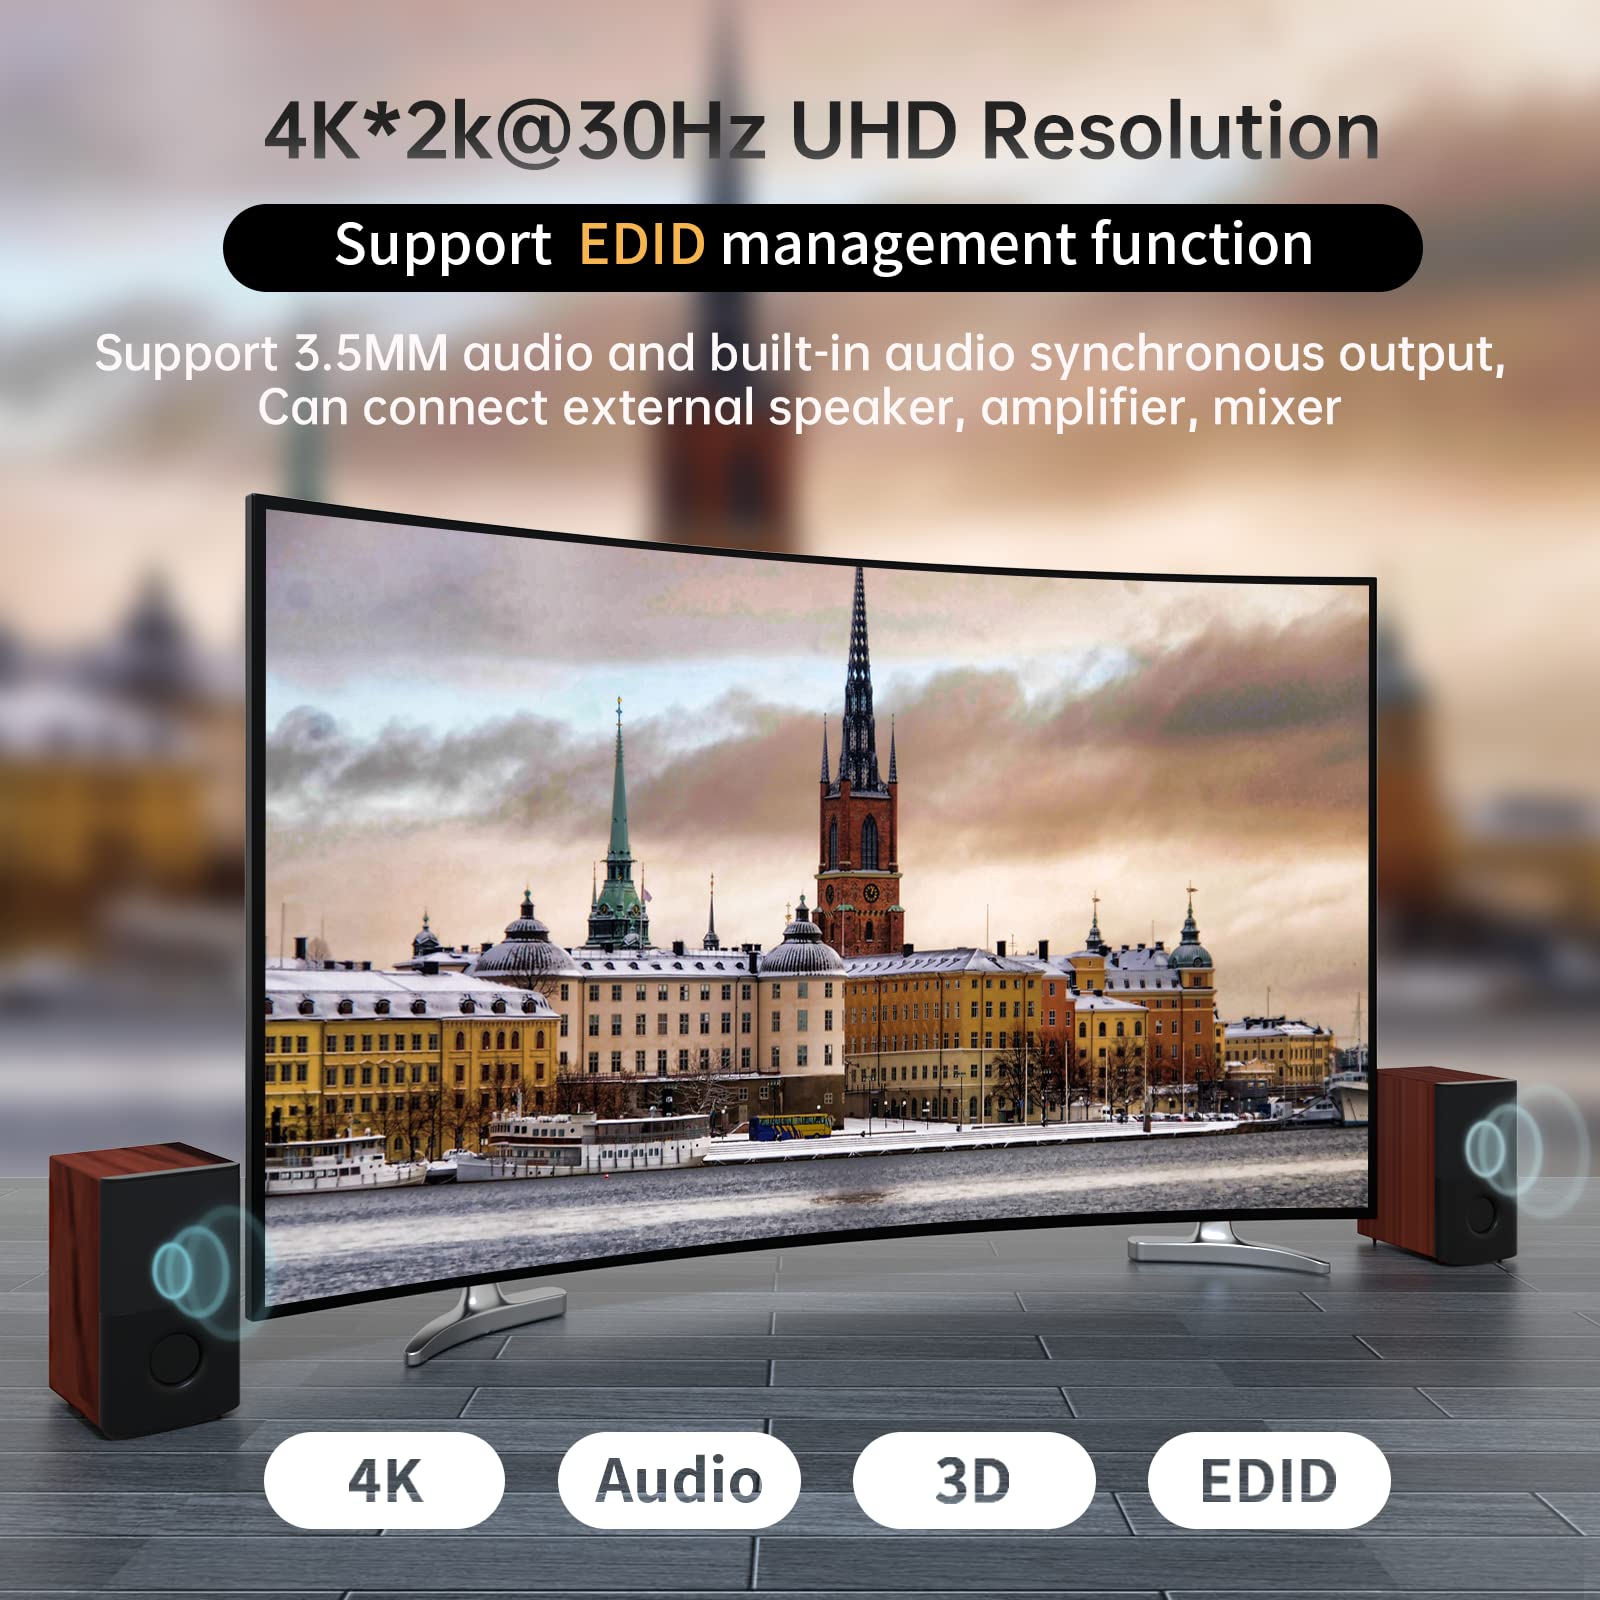 MT-VIKI 4K HDMI Matrix Switch 8X8 Support Web GUI w/IR Remote, 3.5mm Stereo Audio, Rack Mount Switcher & Splitter, 4K@30Hz, EDID, RS232, LAN Port